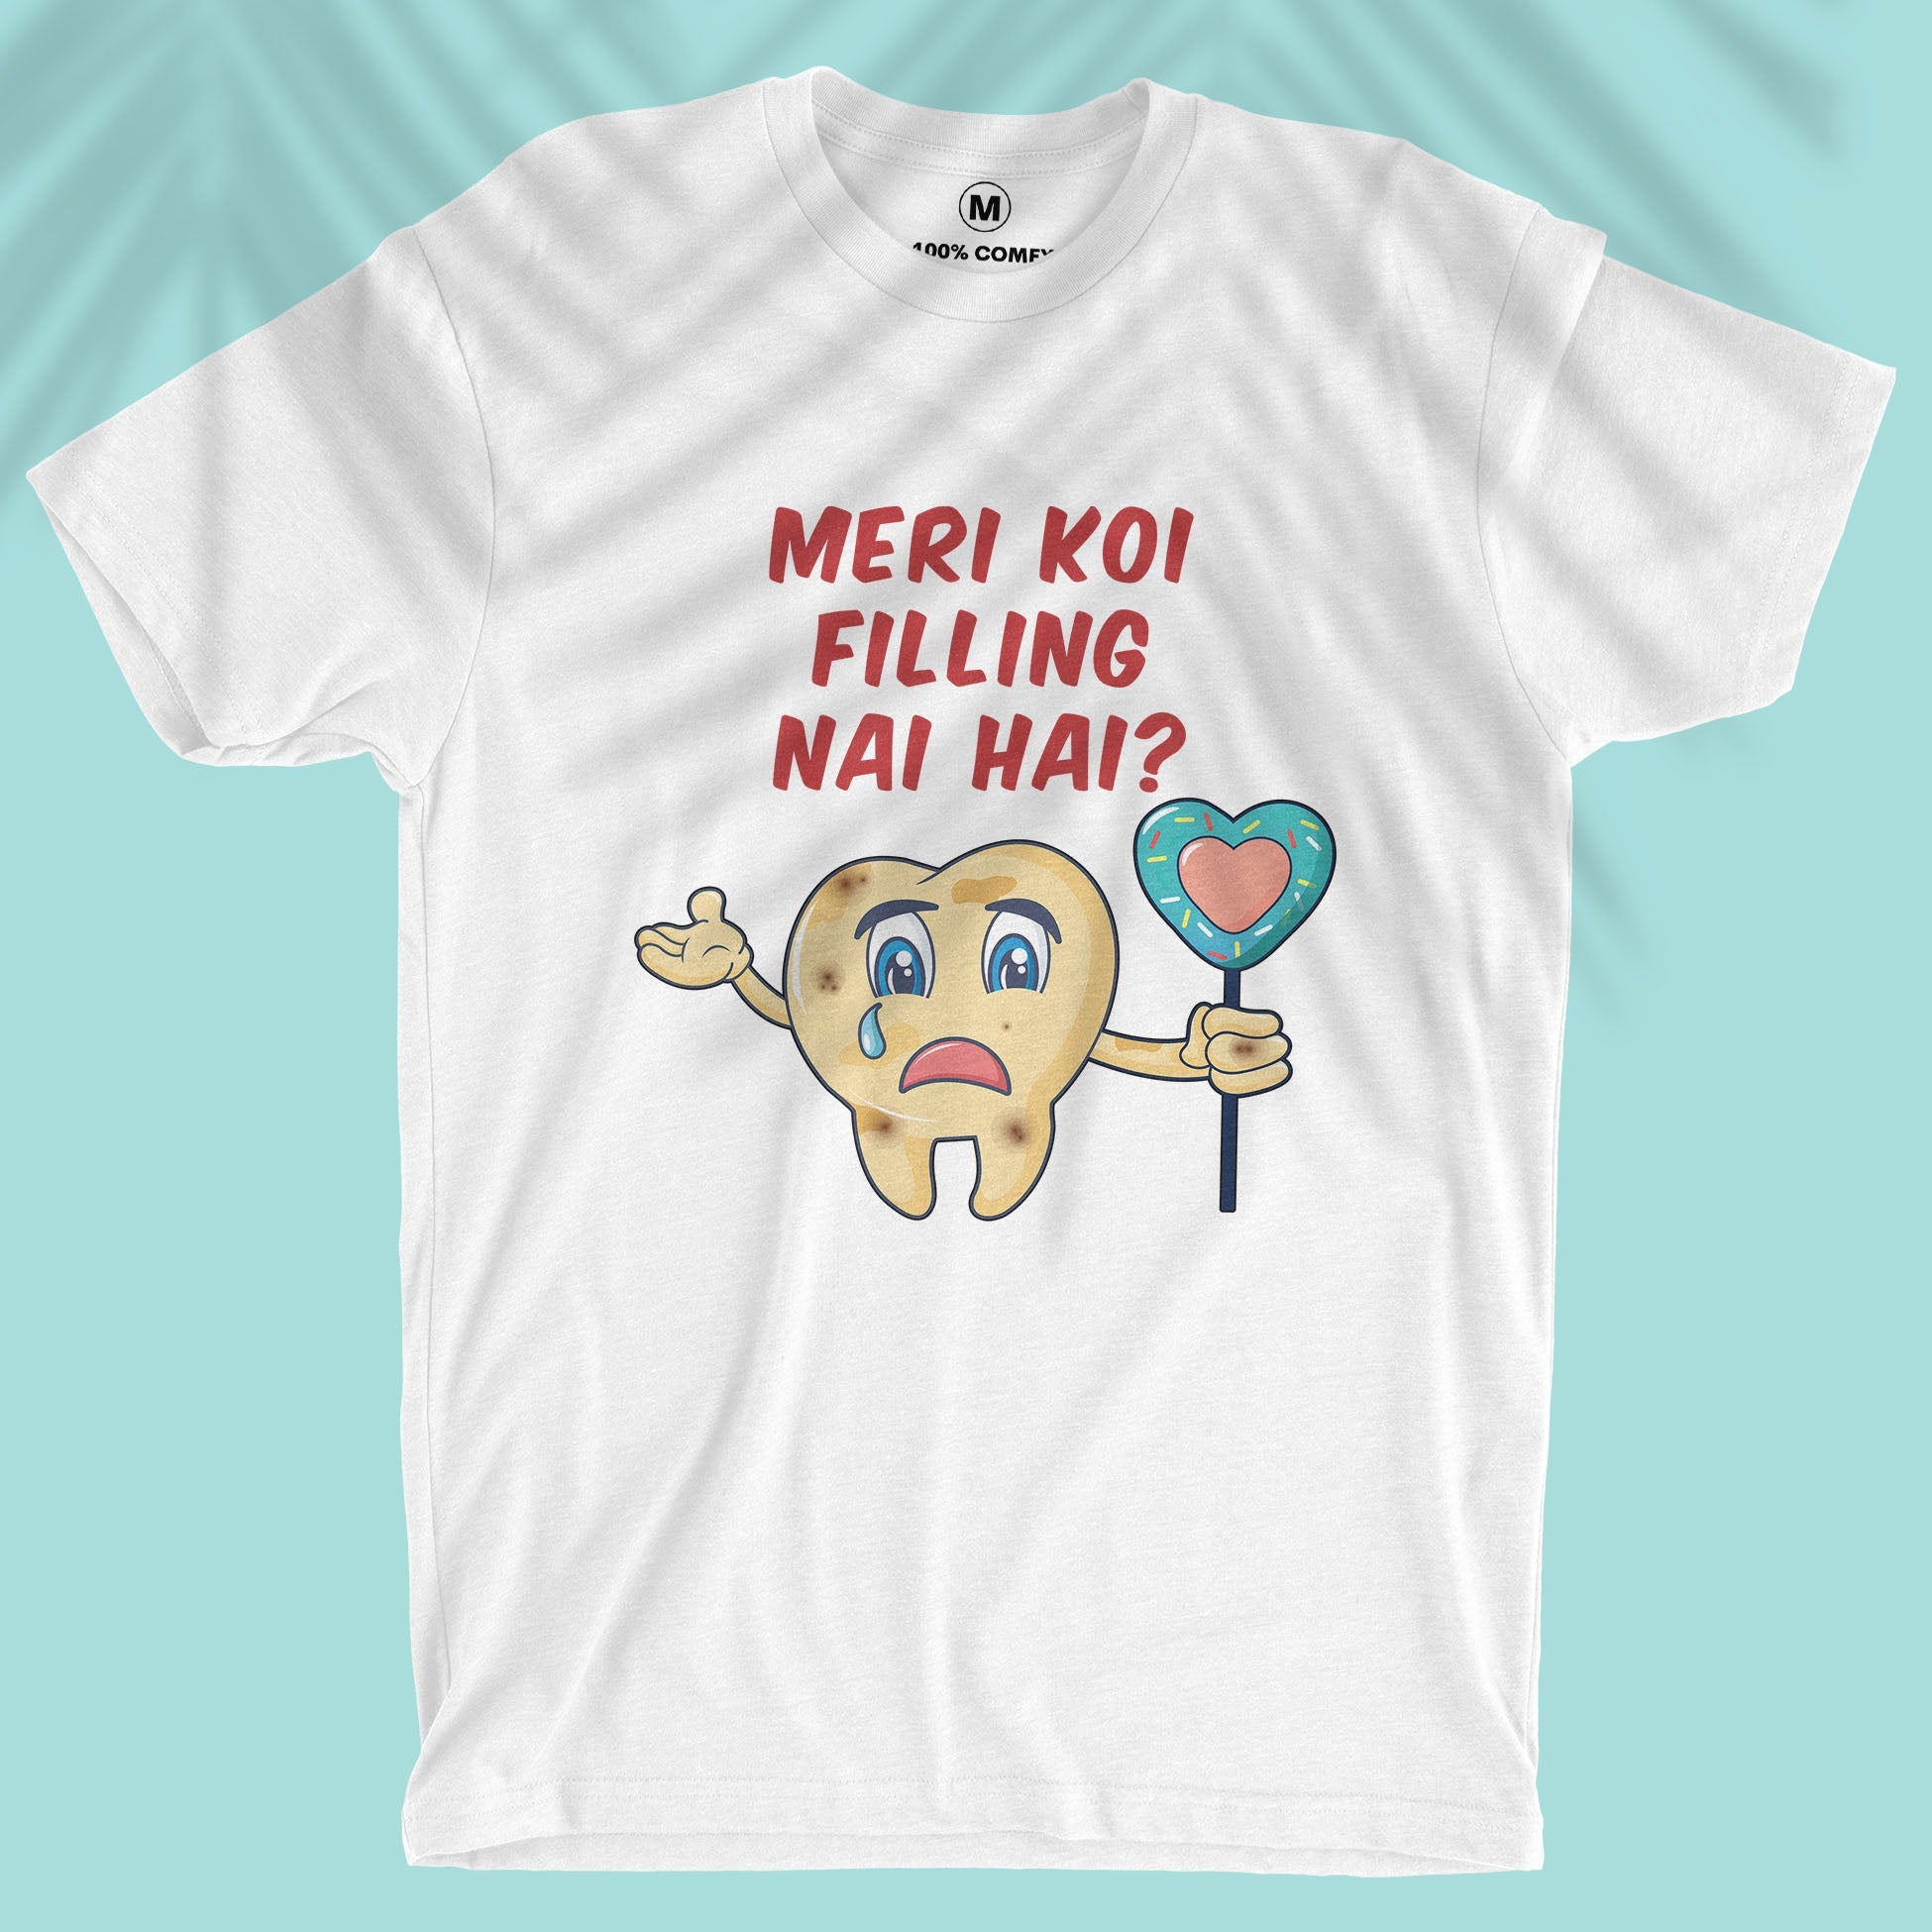 Filling - Men T-shirt